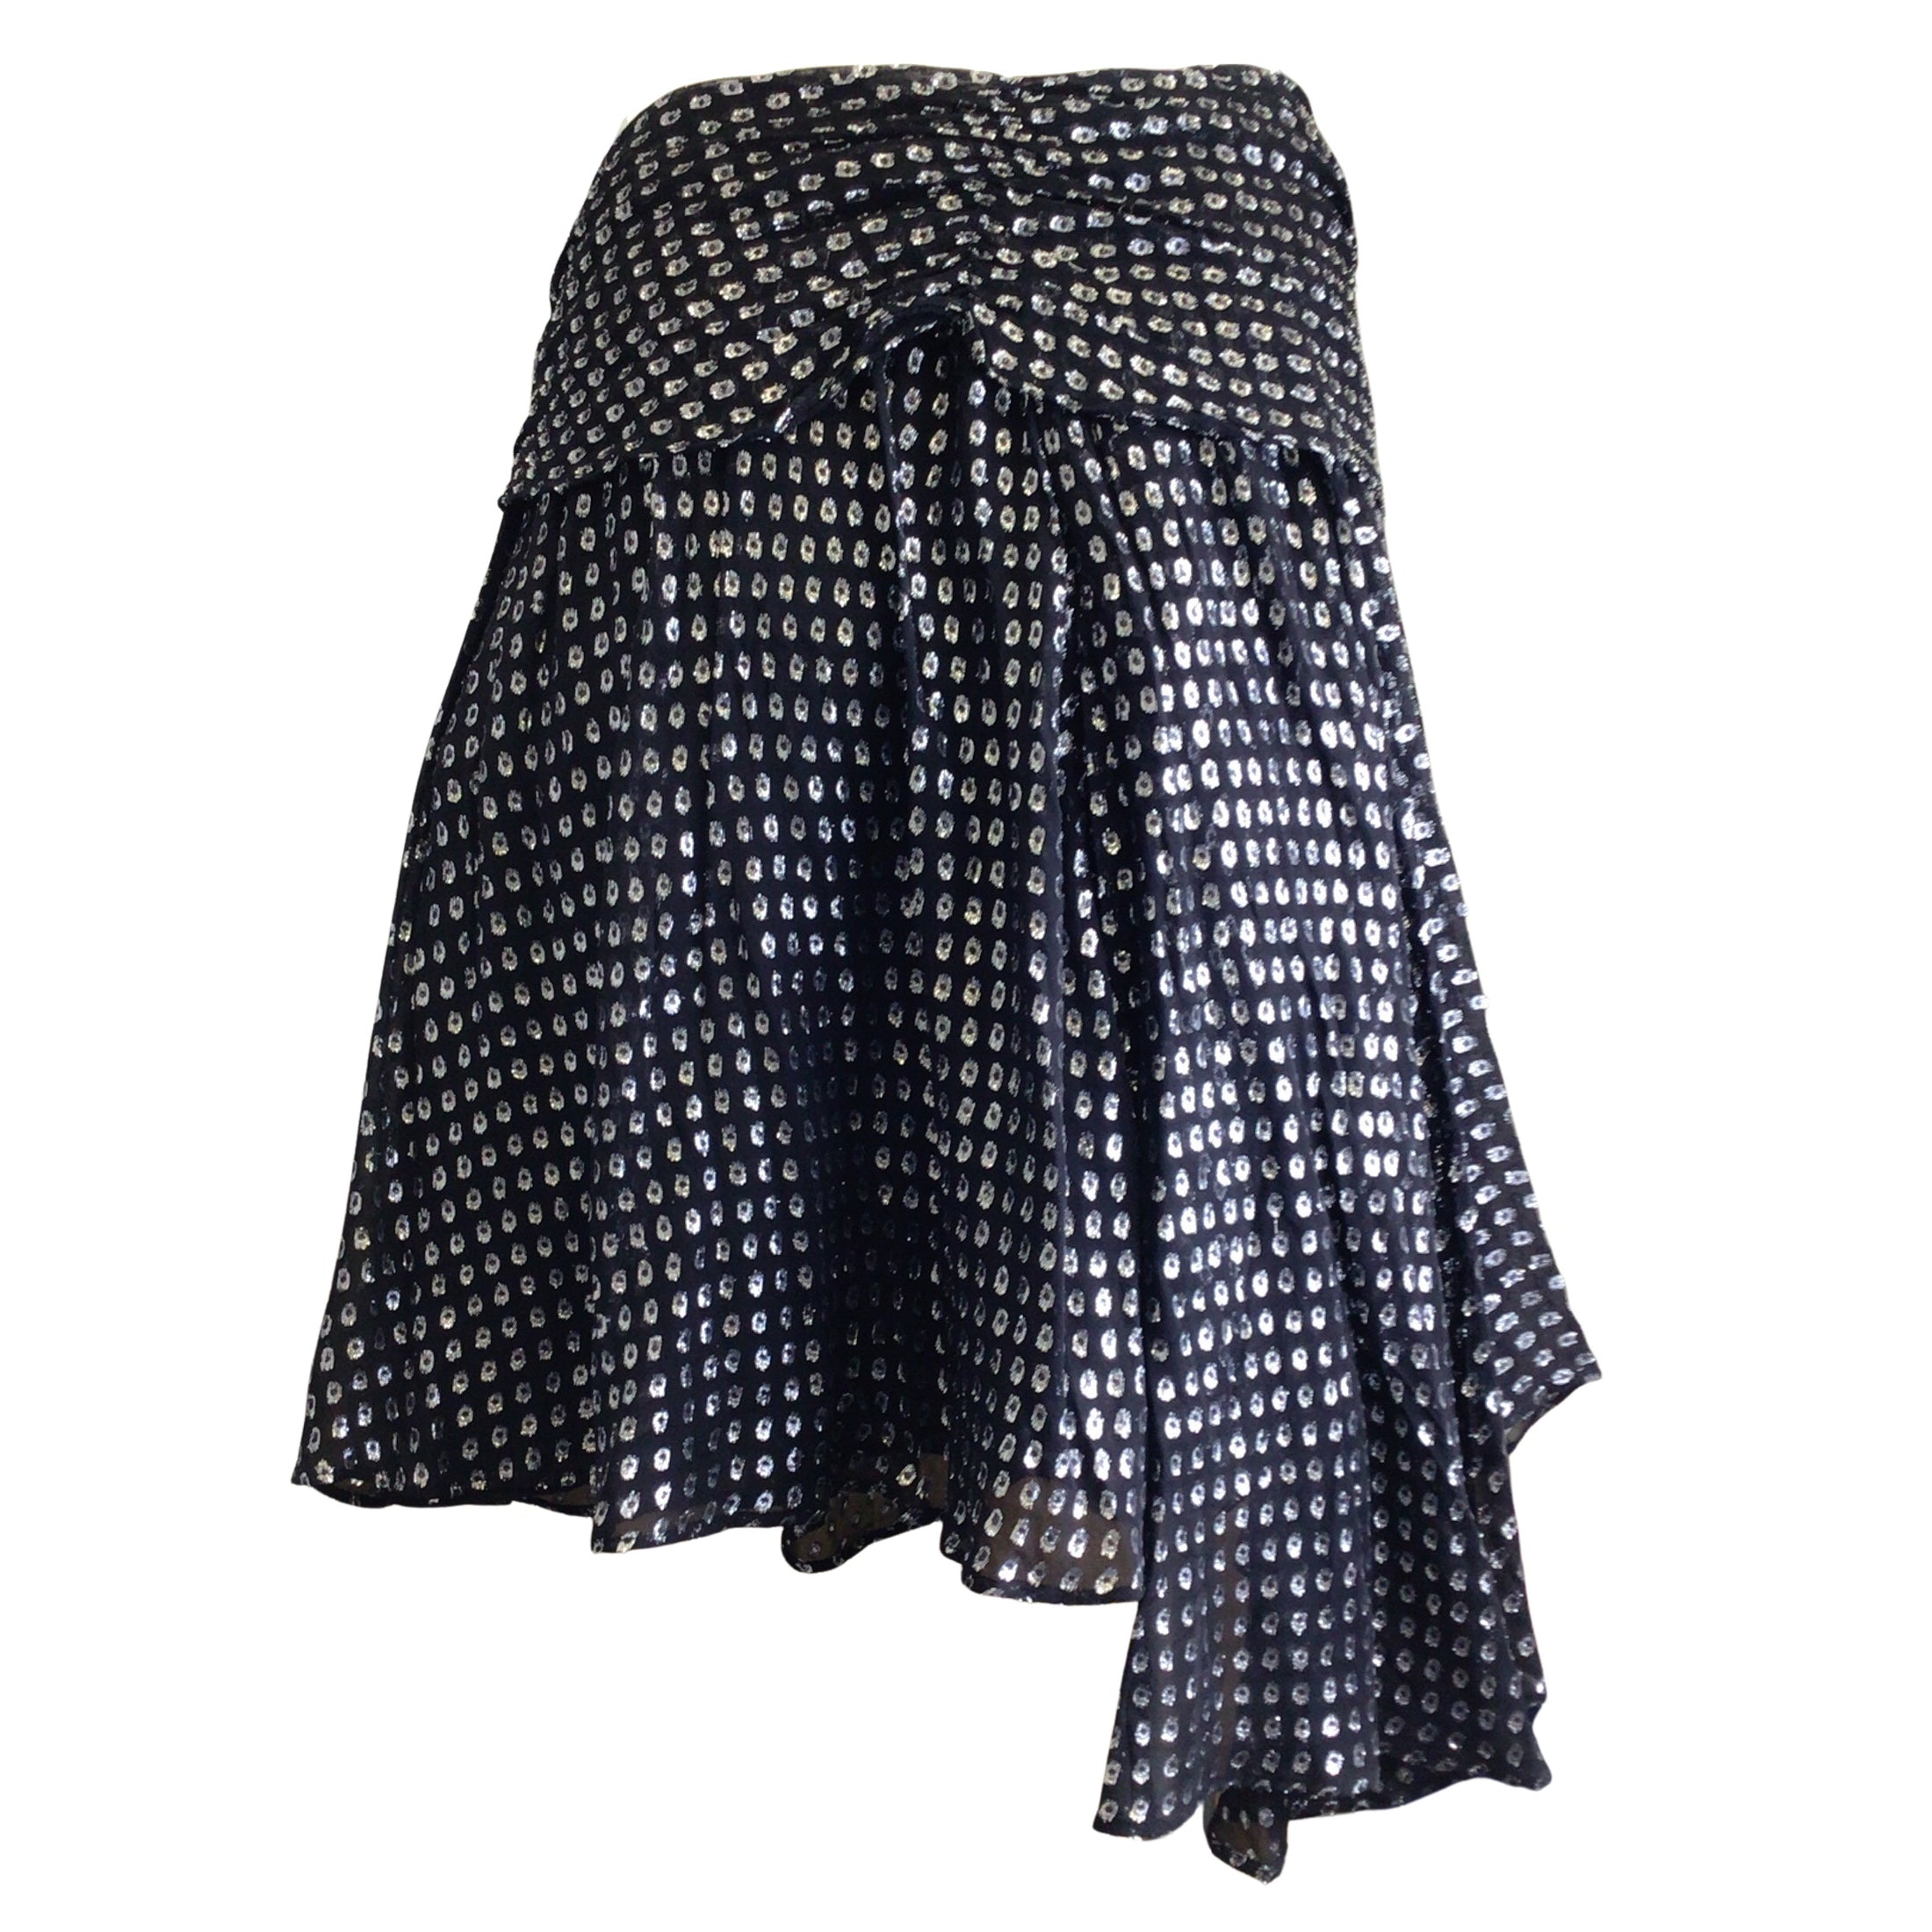 Dodo Bar Or Black / Silver Crystal Embellished Silk Skirt